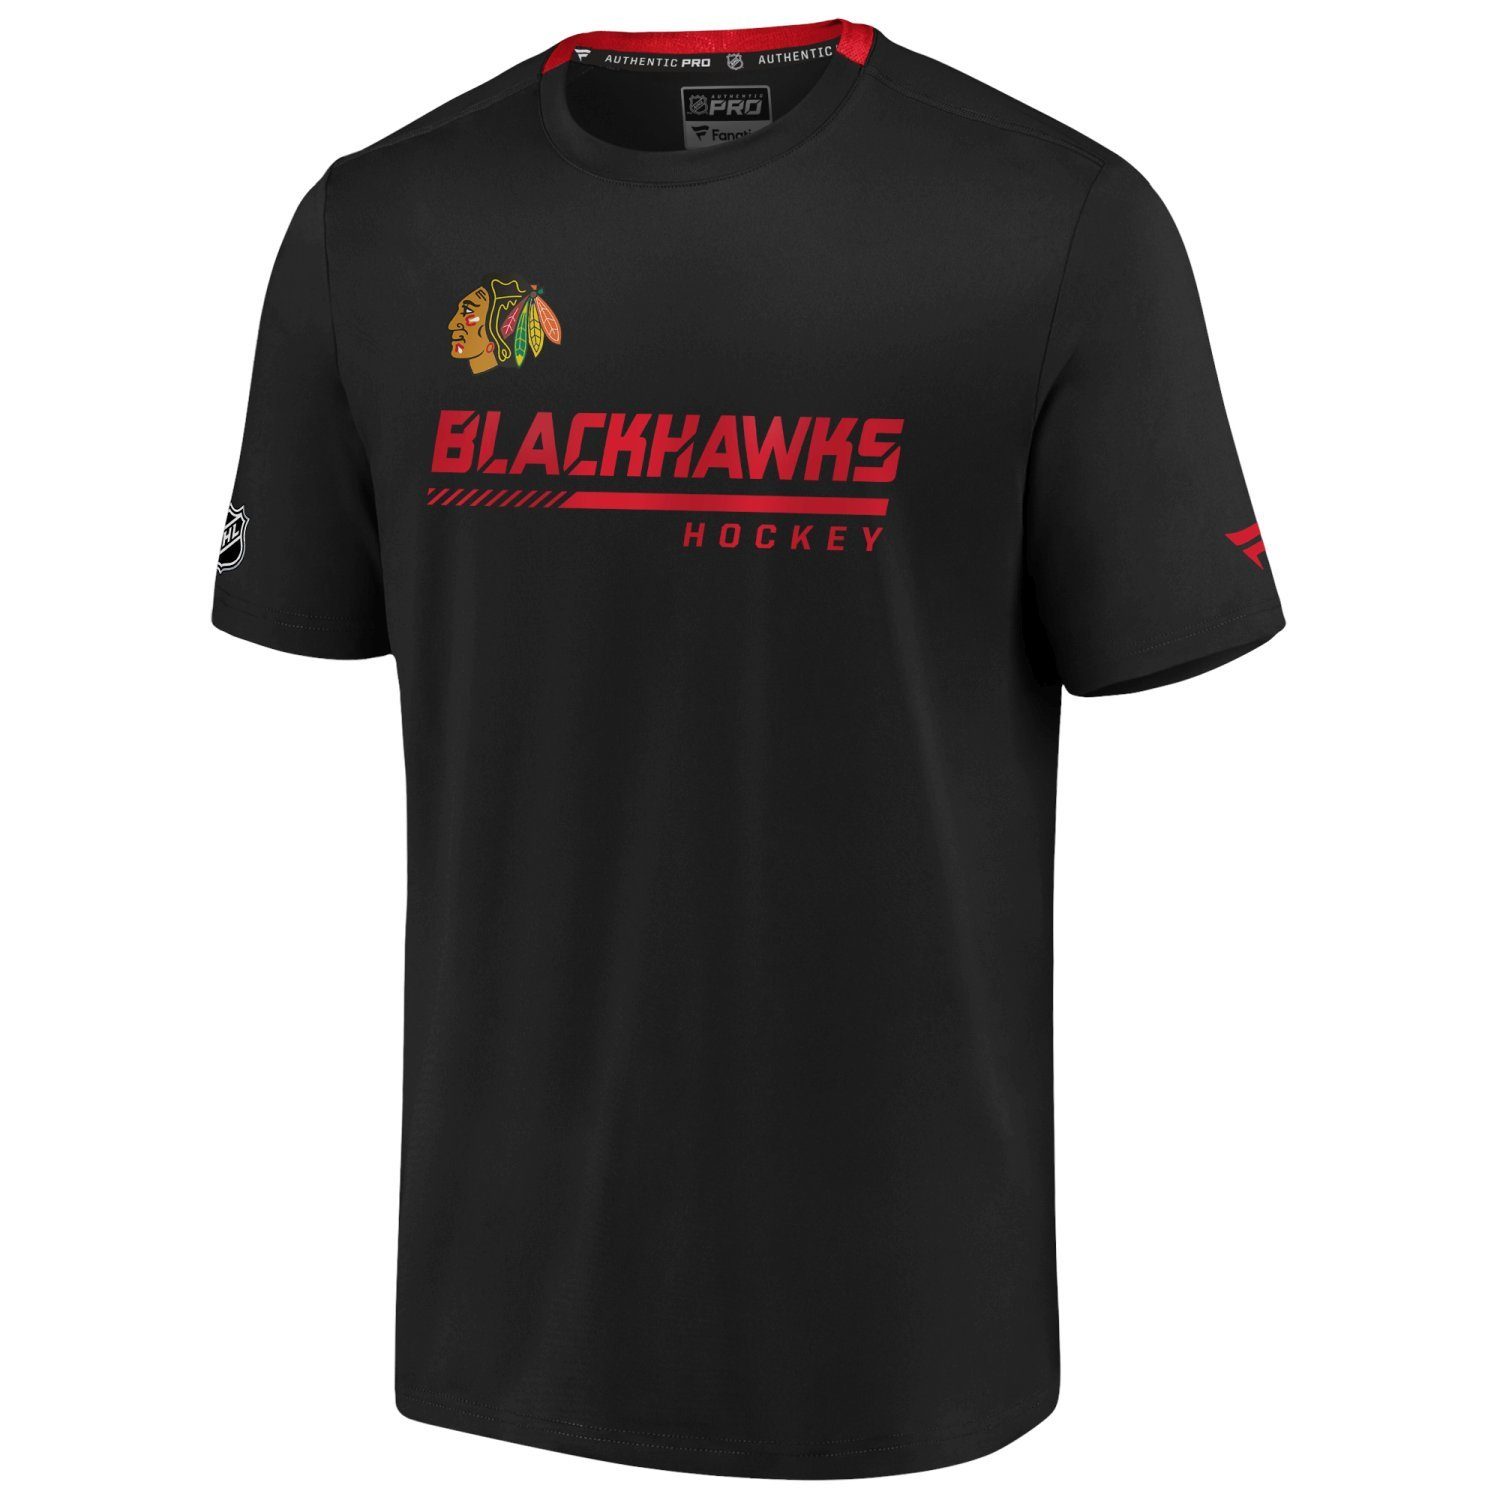 Print-Shirt Blackhawks Locker NHL Authentic Room Performance Chicago Fanatics Pro